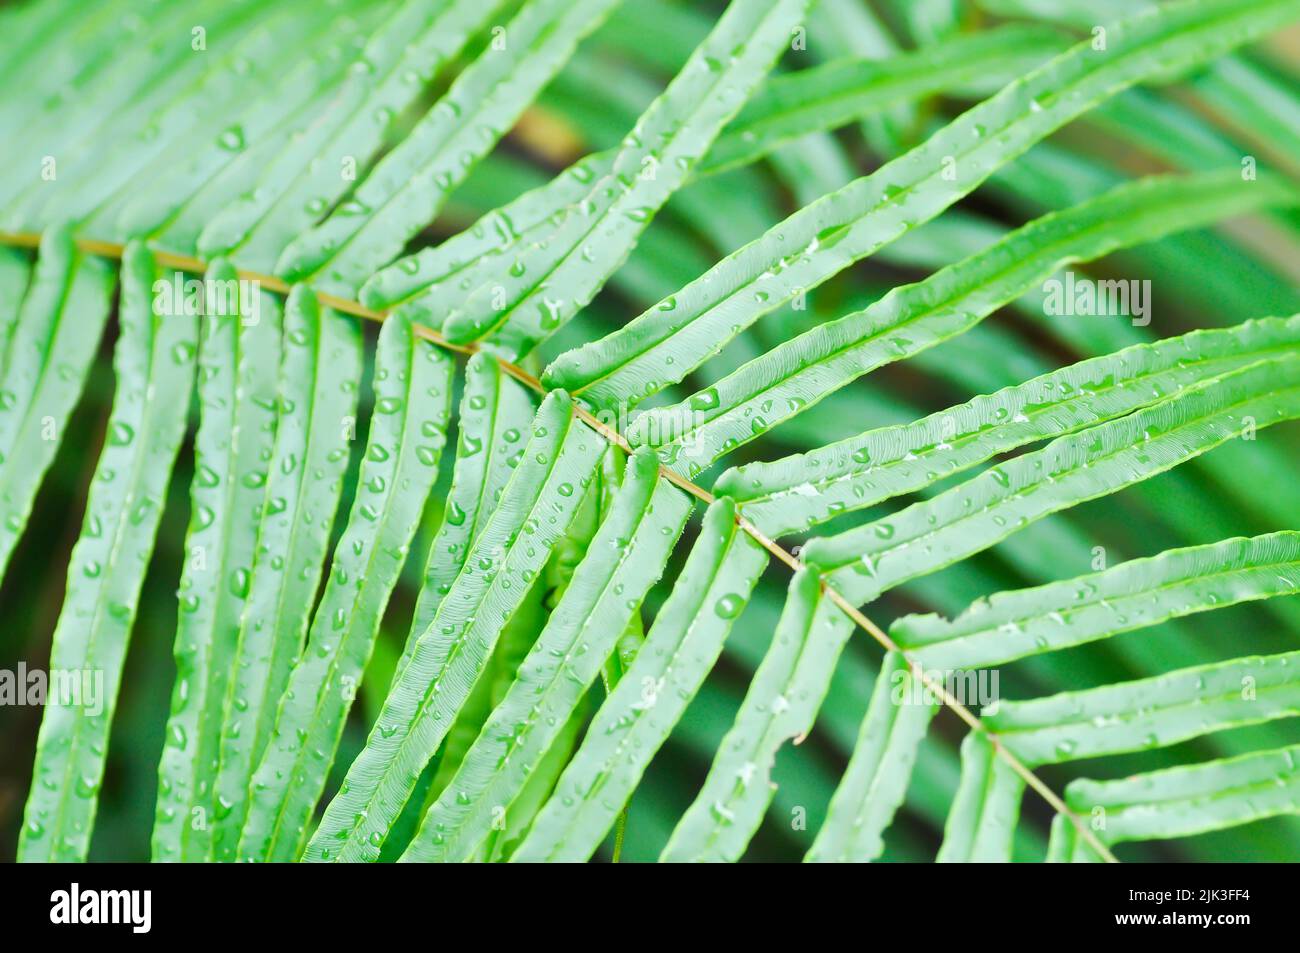 Pteris vittataPteris vittata or Pteris vittata L or fern , fern plant and rain drop Stock Photo